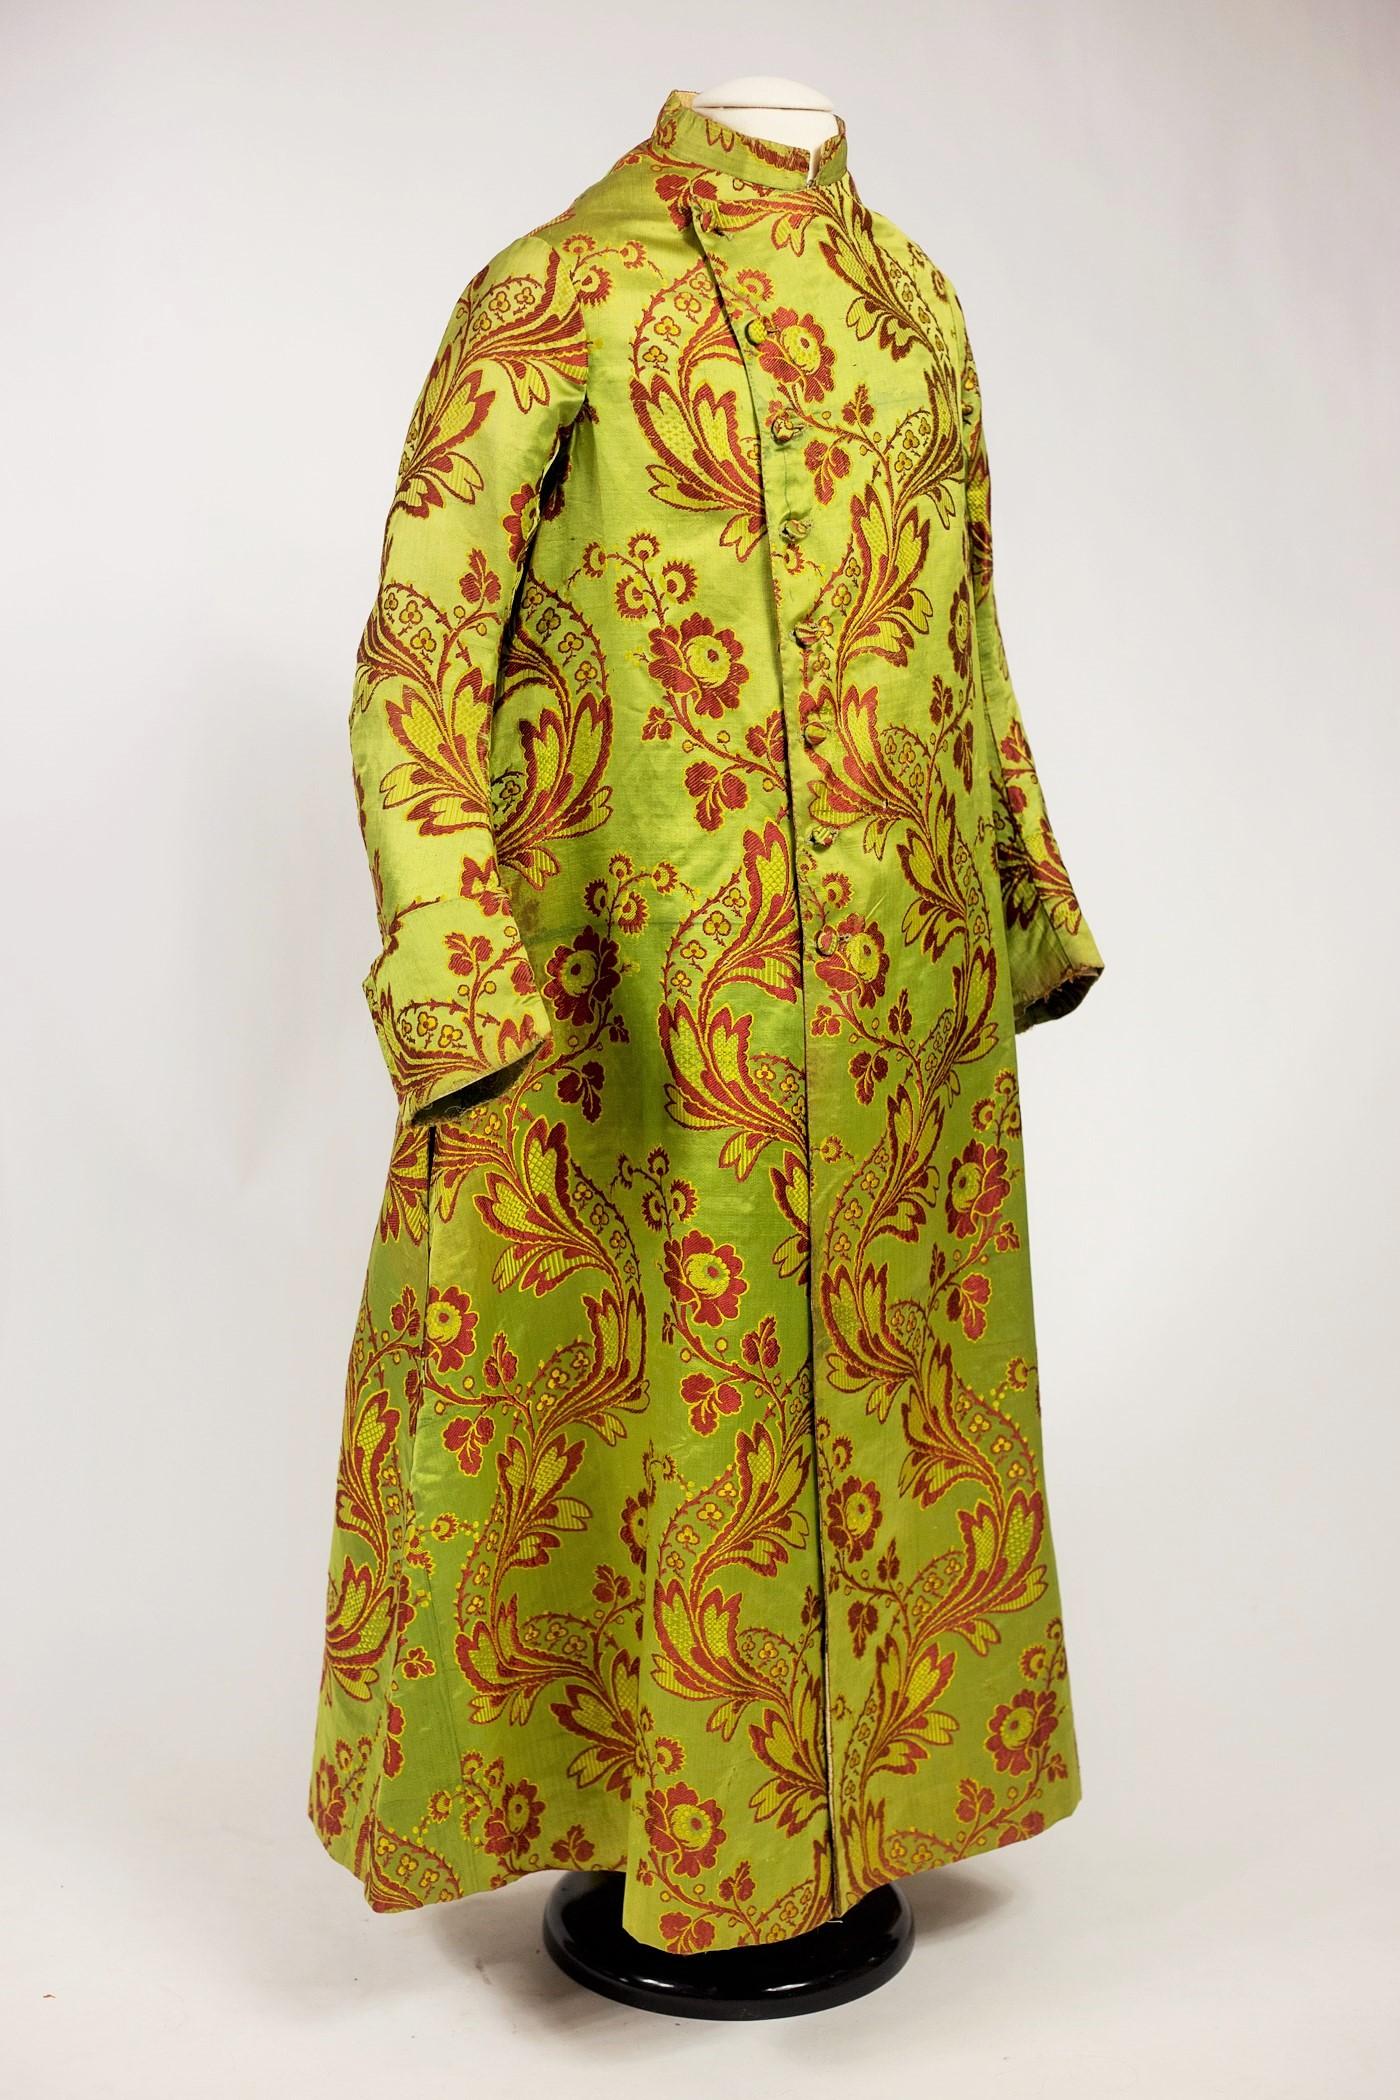 embroidered banyan coat